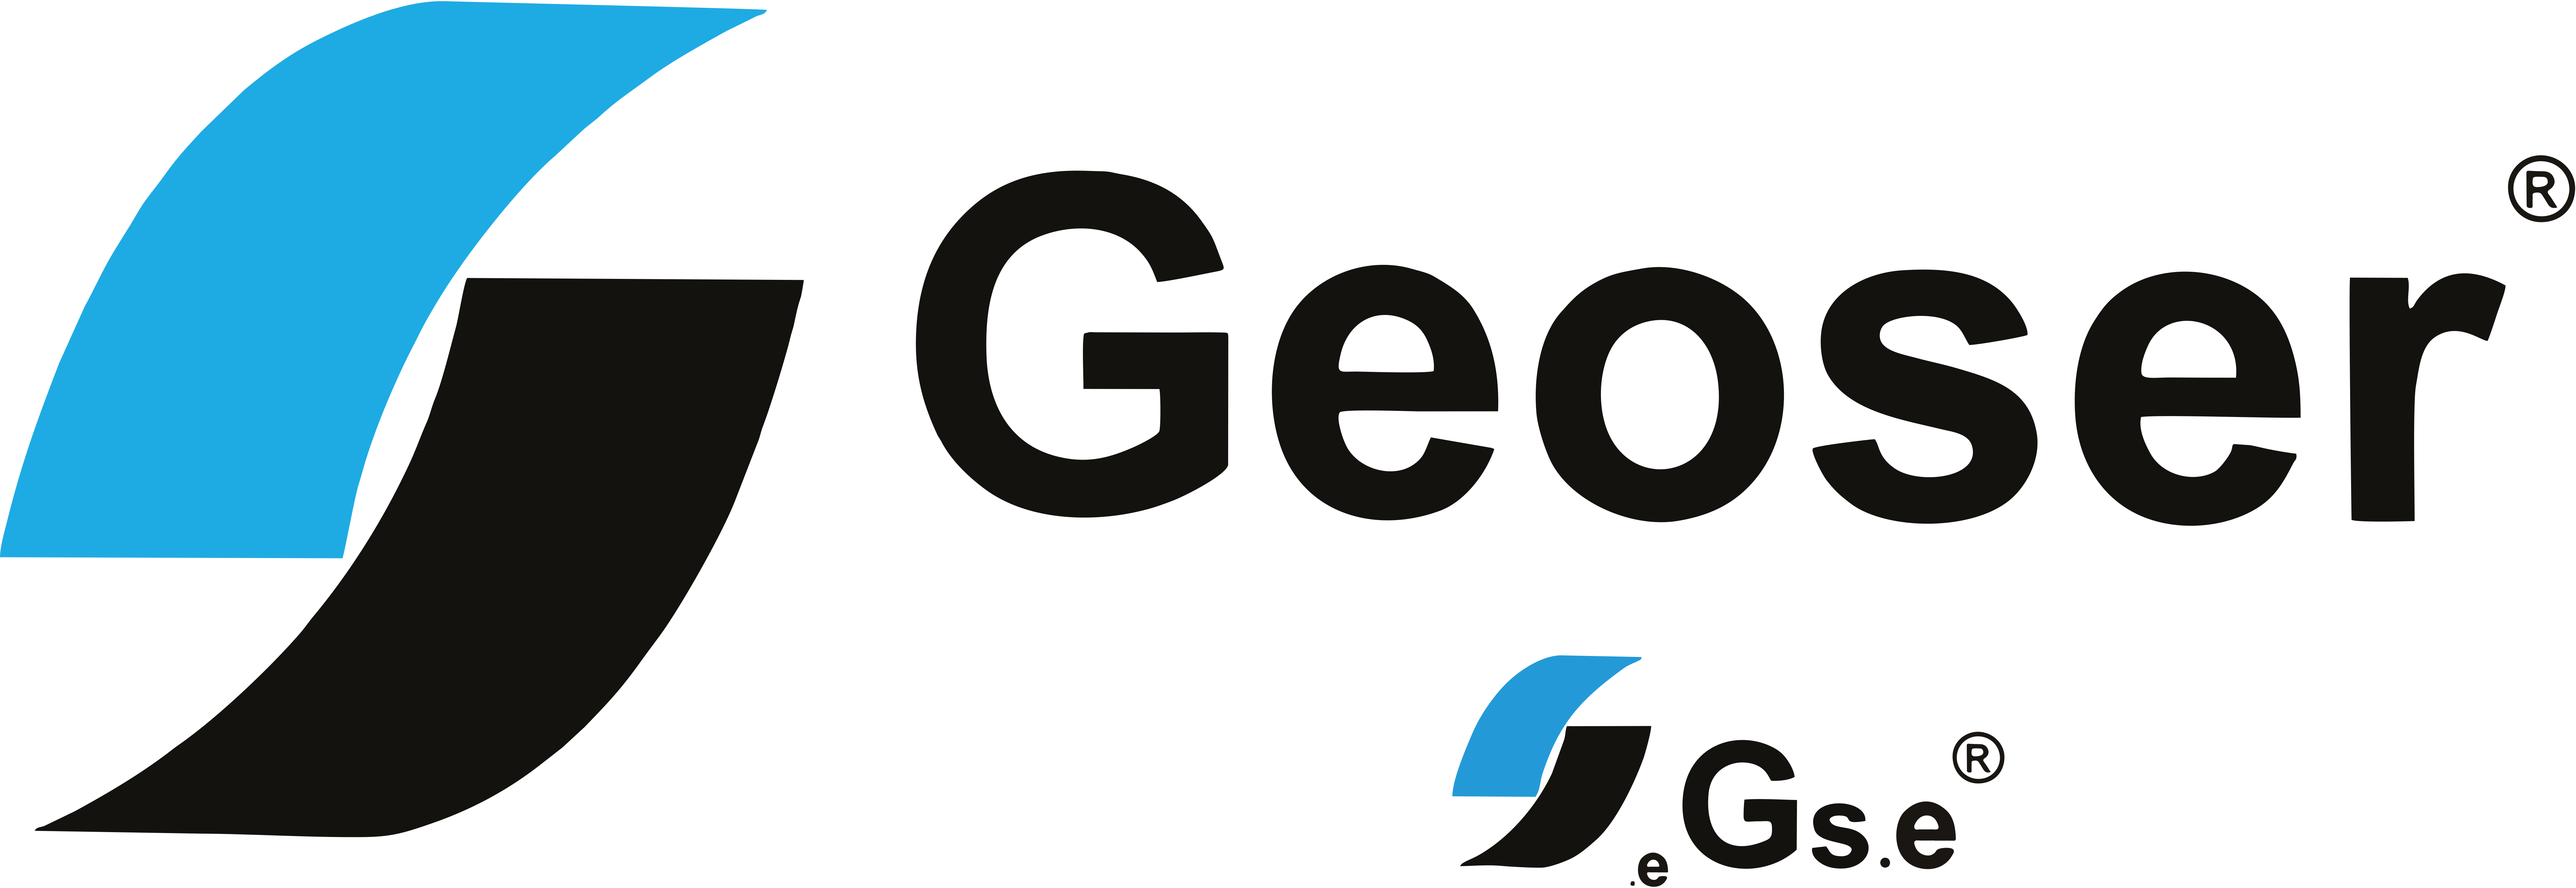 Geoser Geosentetik